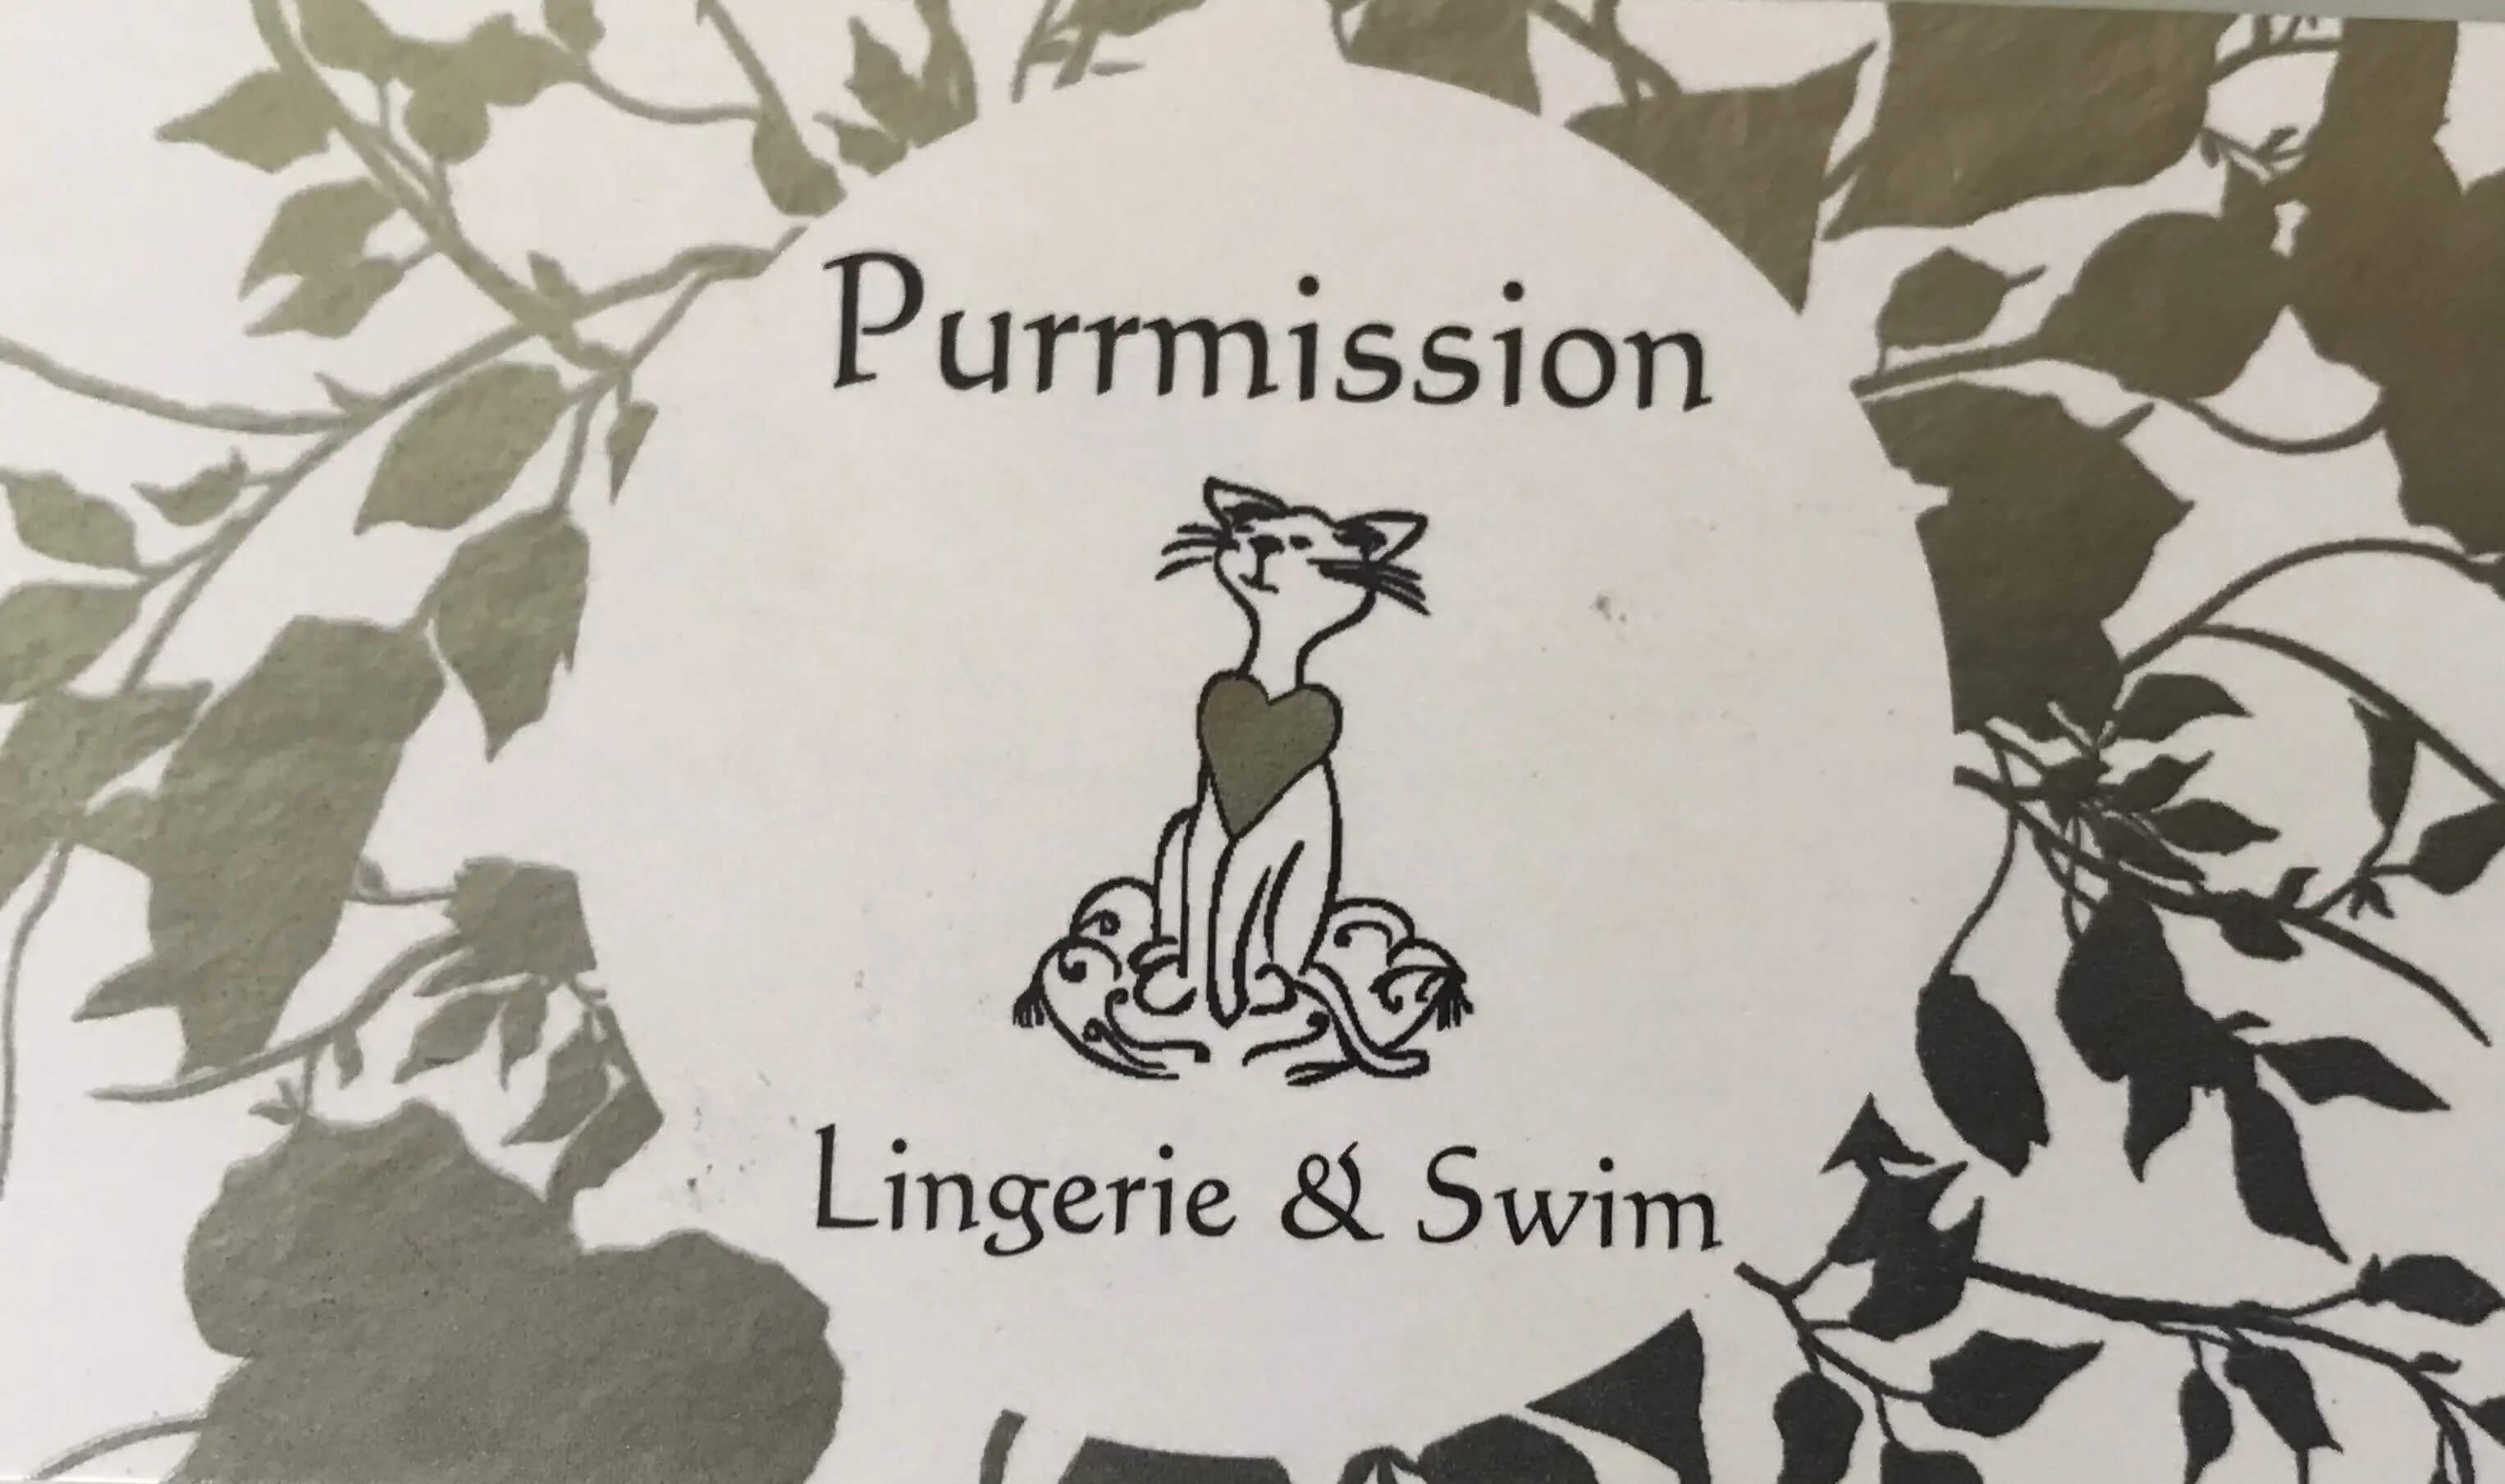 Purrmission – Lingerie & Swimwear